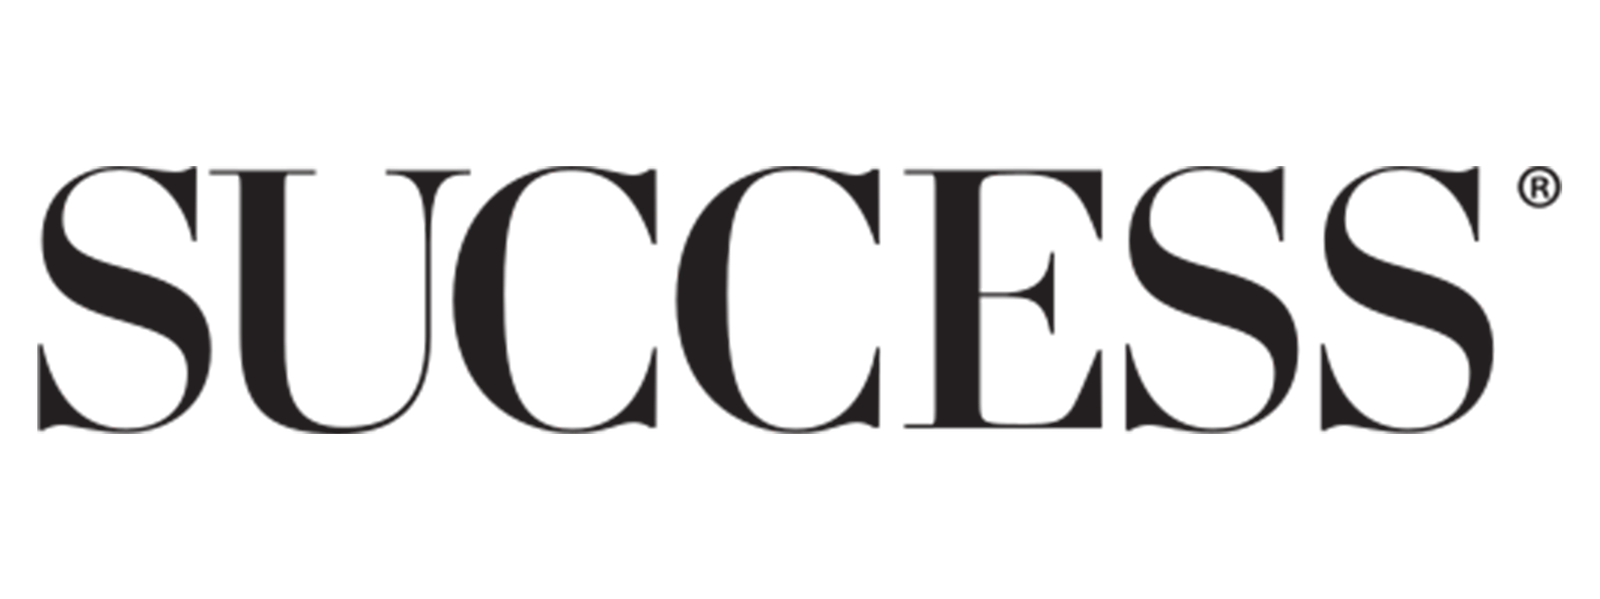 Success-logo